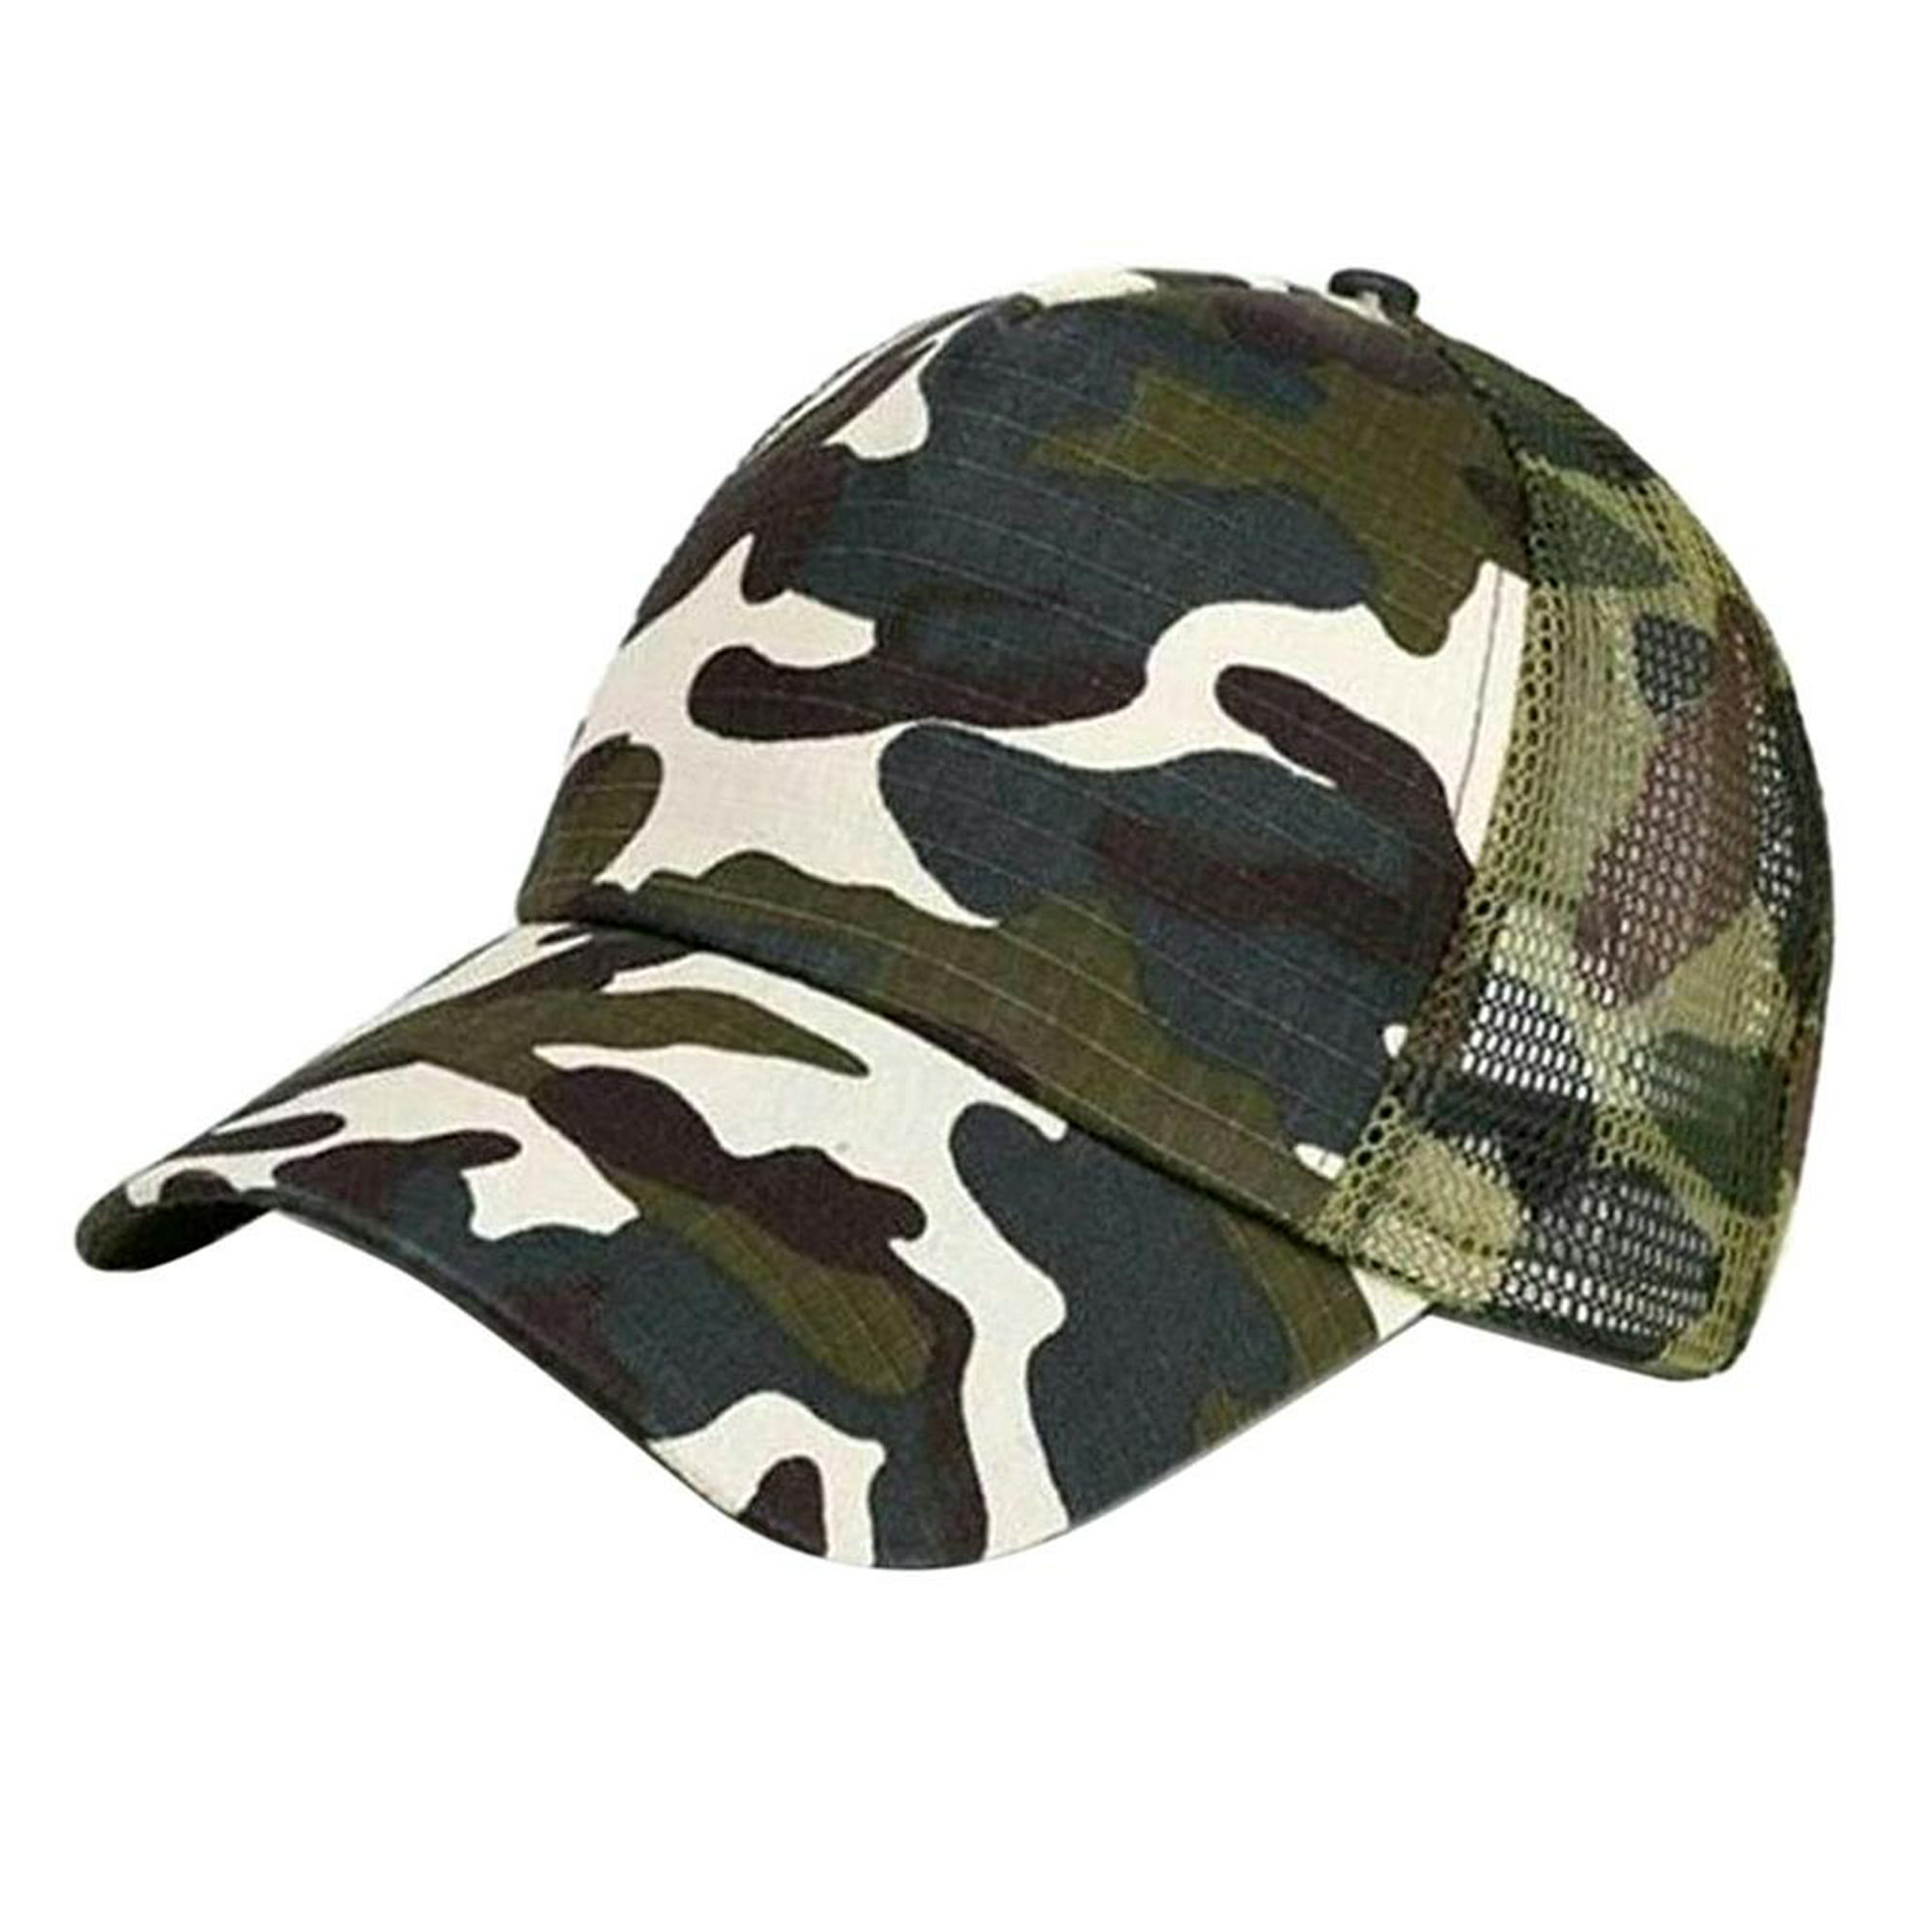 Comprar Gorra militar de camuflaje para hombre, gorra de béisbol, sombreros  de verano para mujer, gorra de camionero de hip hop